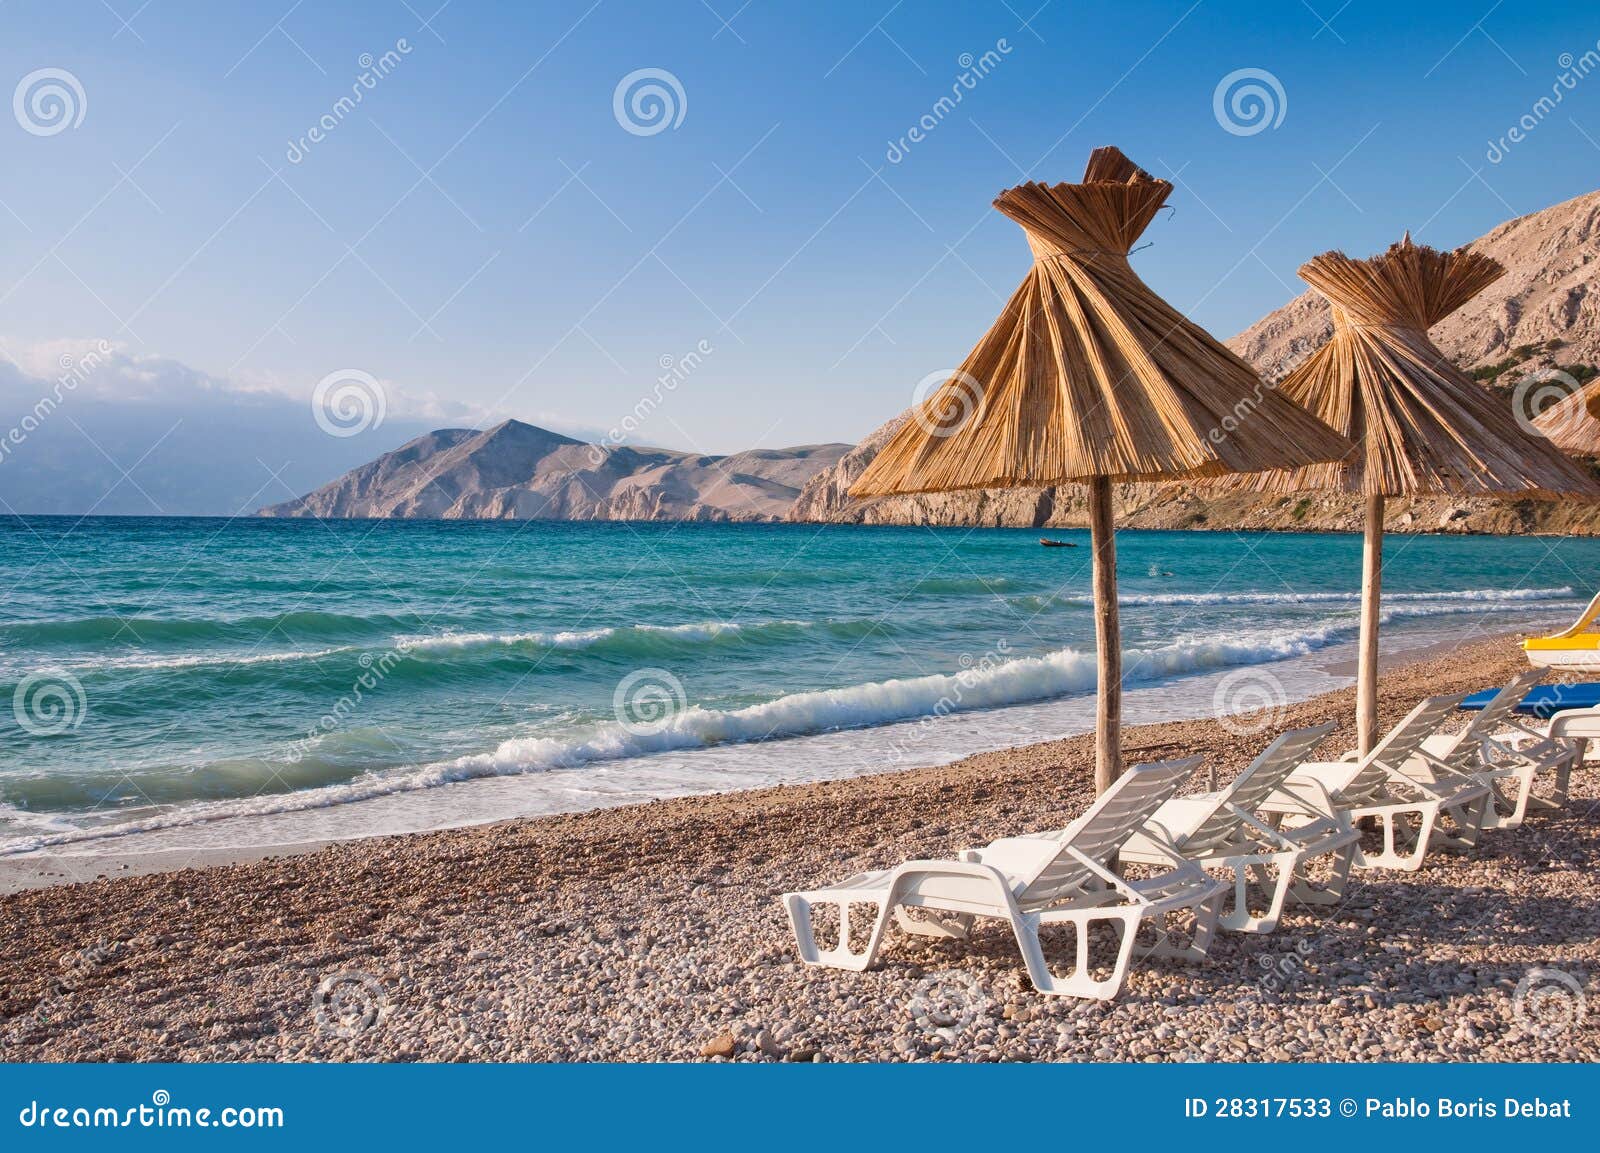 sunshade and deck chair on beach at baska in krk croatia